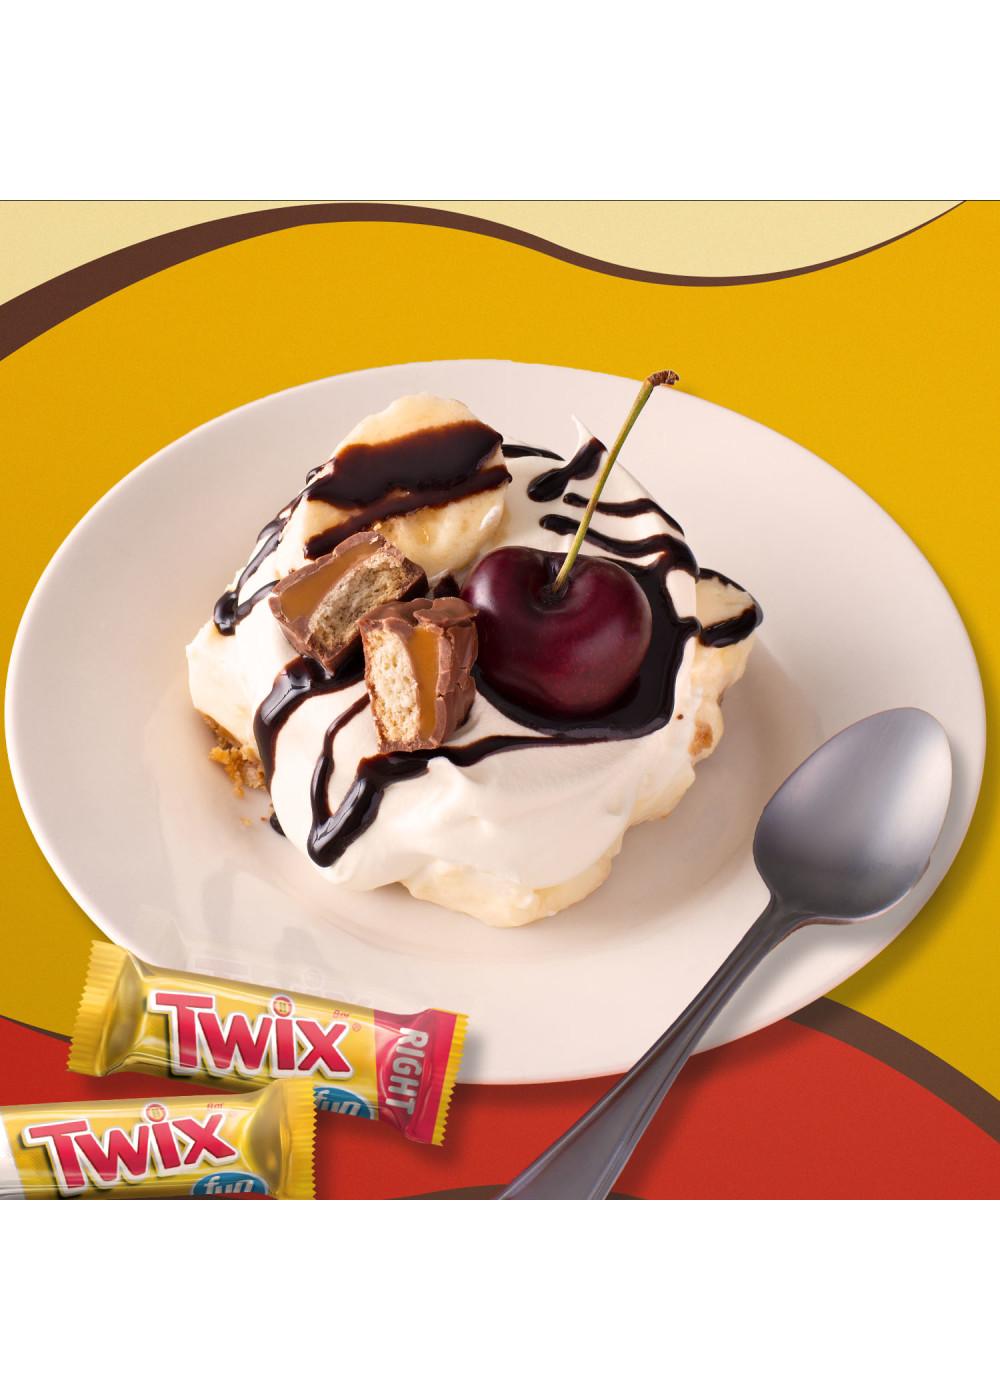 Twix Caramel Chocolate Cookie Fun Size Candy Bars; image 5 of 10